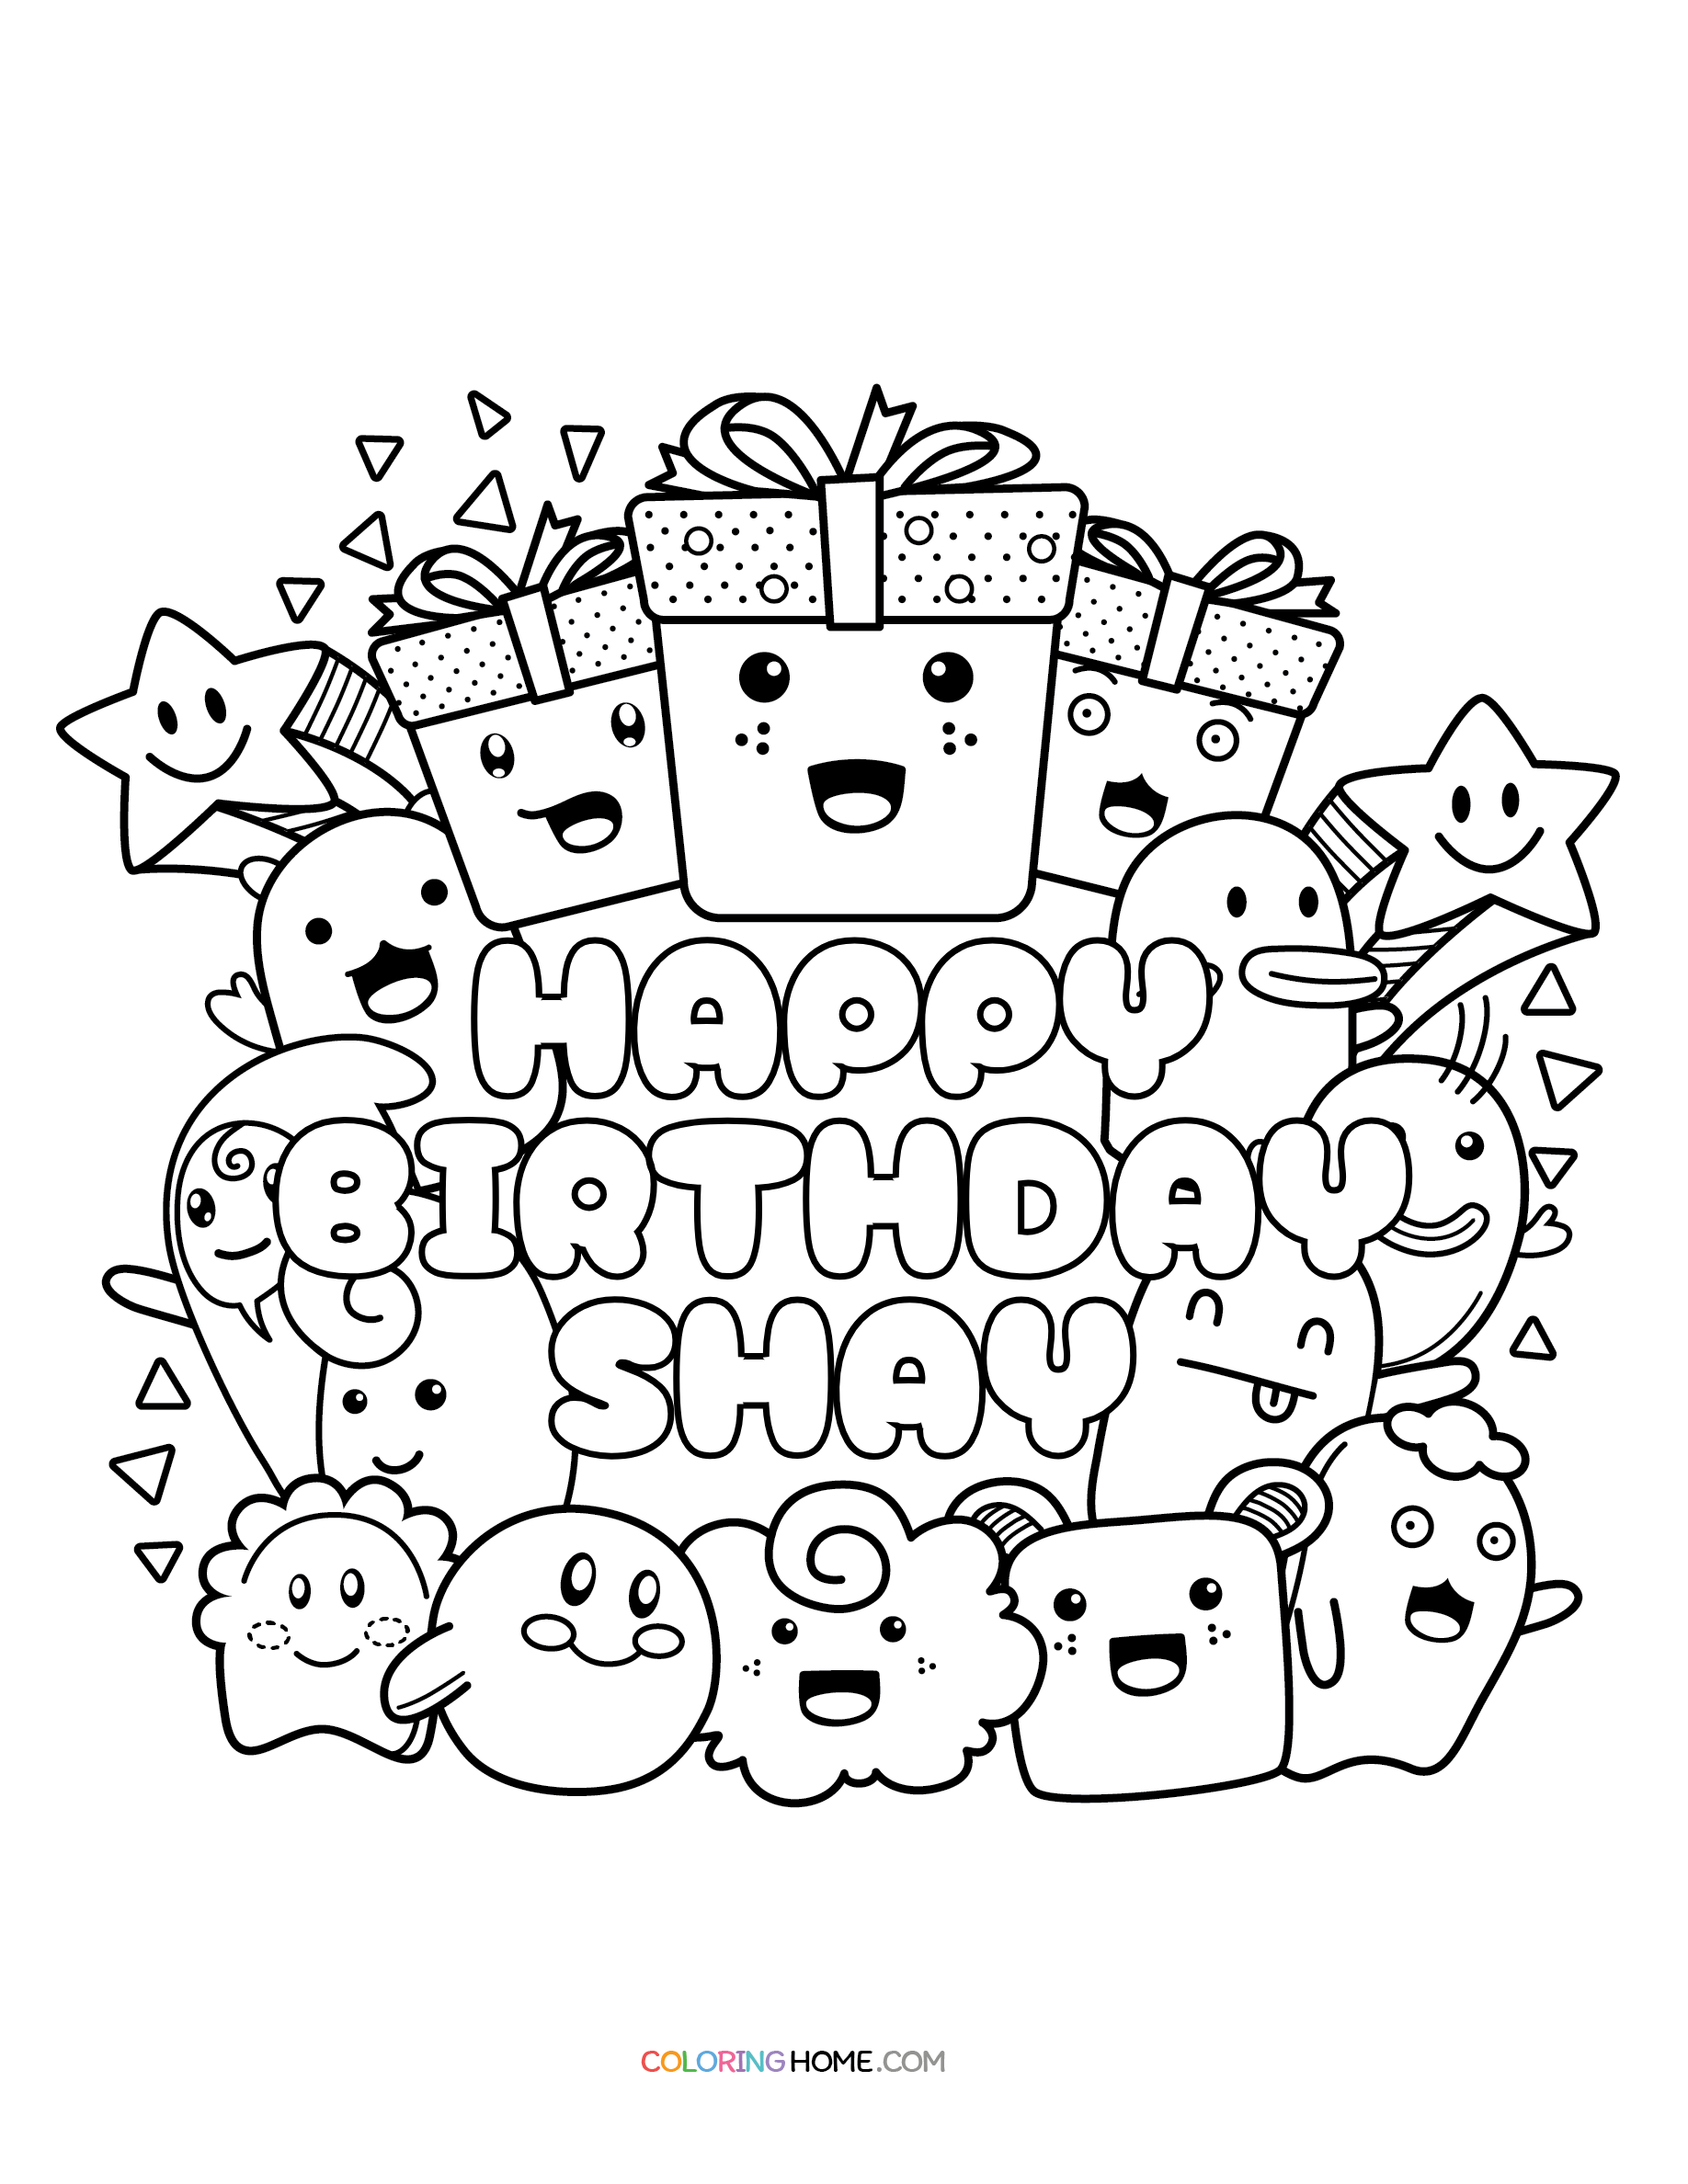 Happy Birthday Shay coloring page